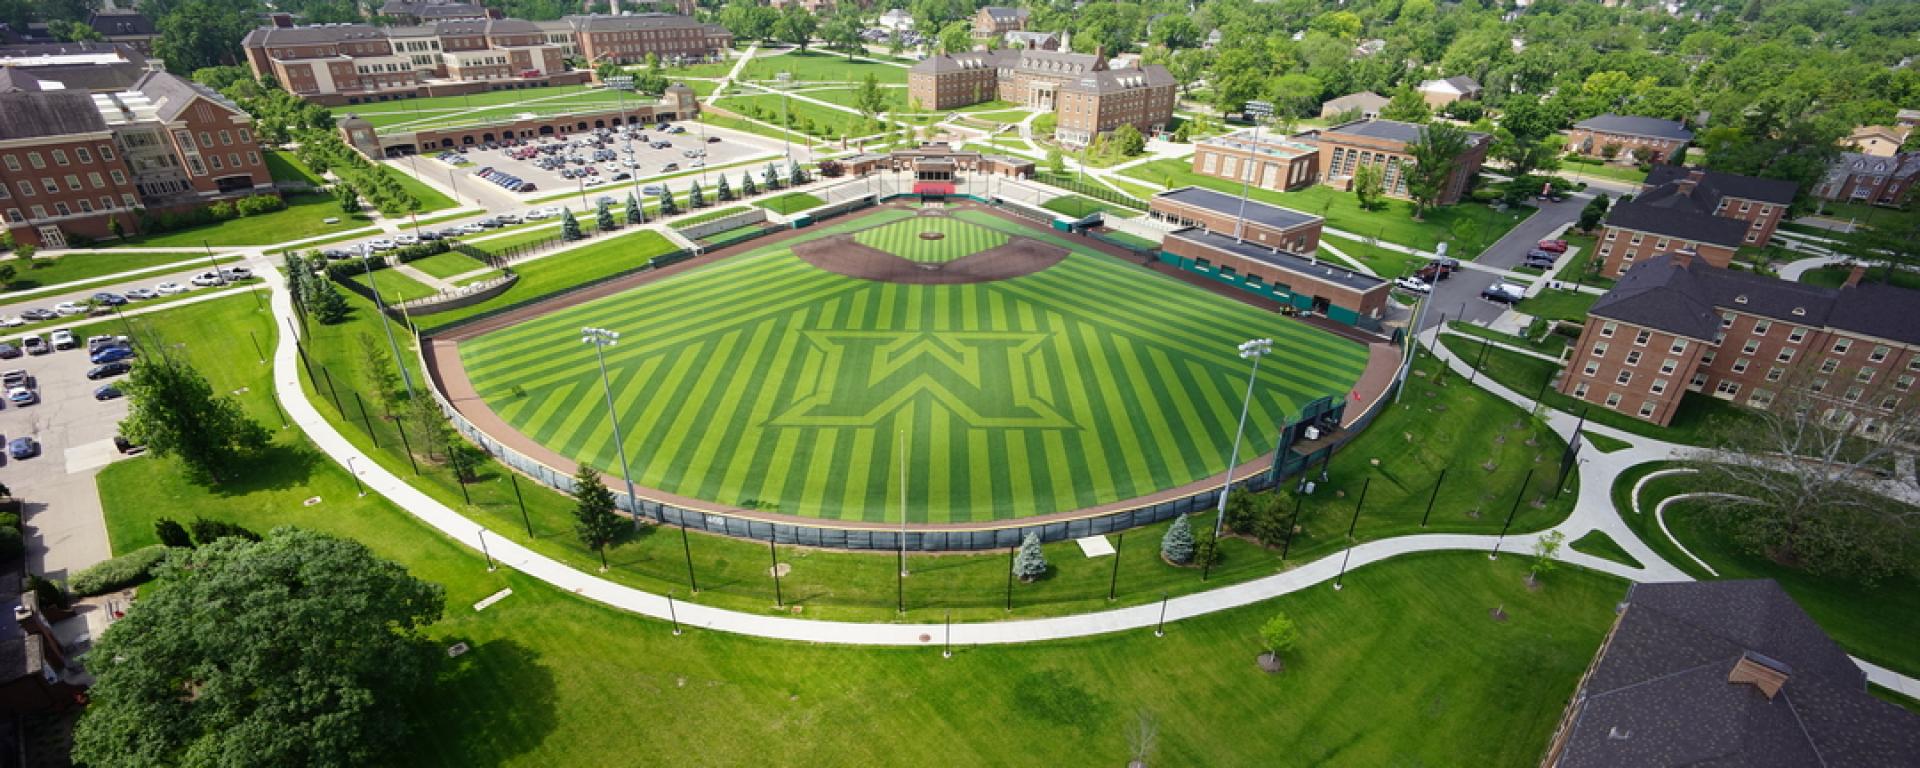 aerial image of baseball field 